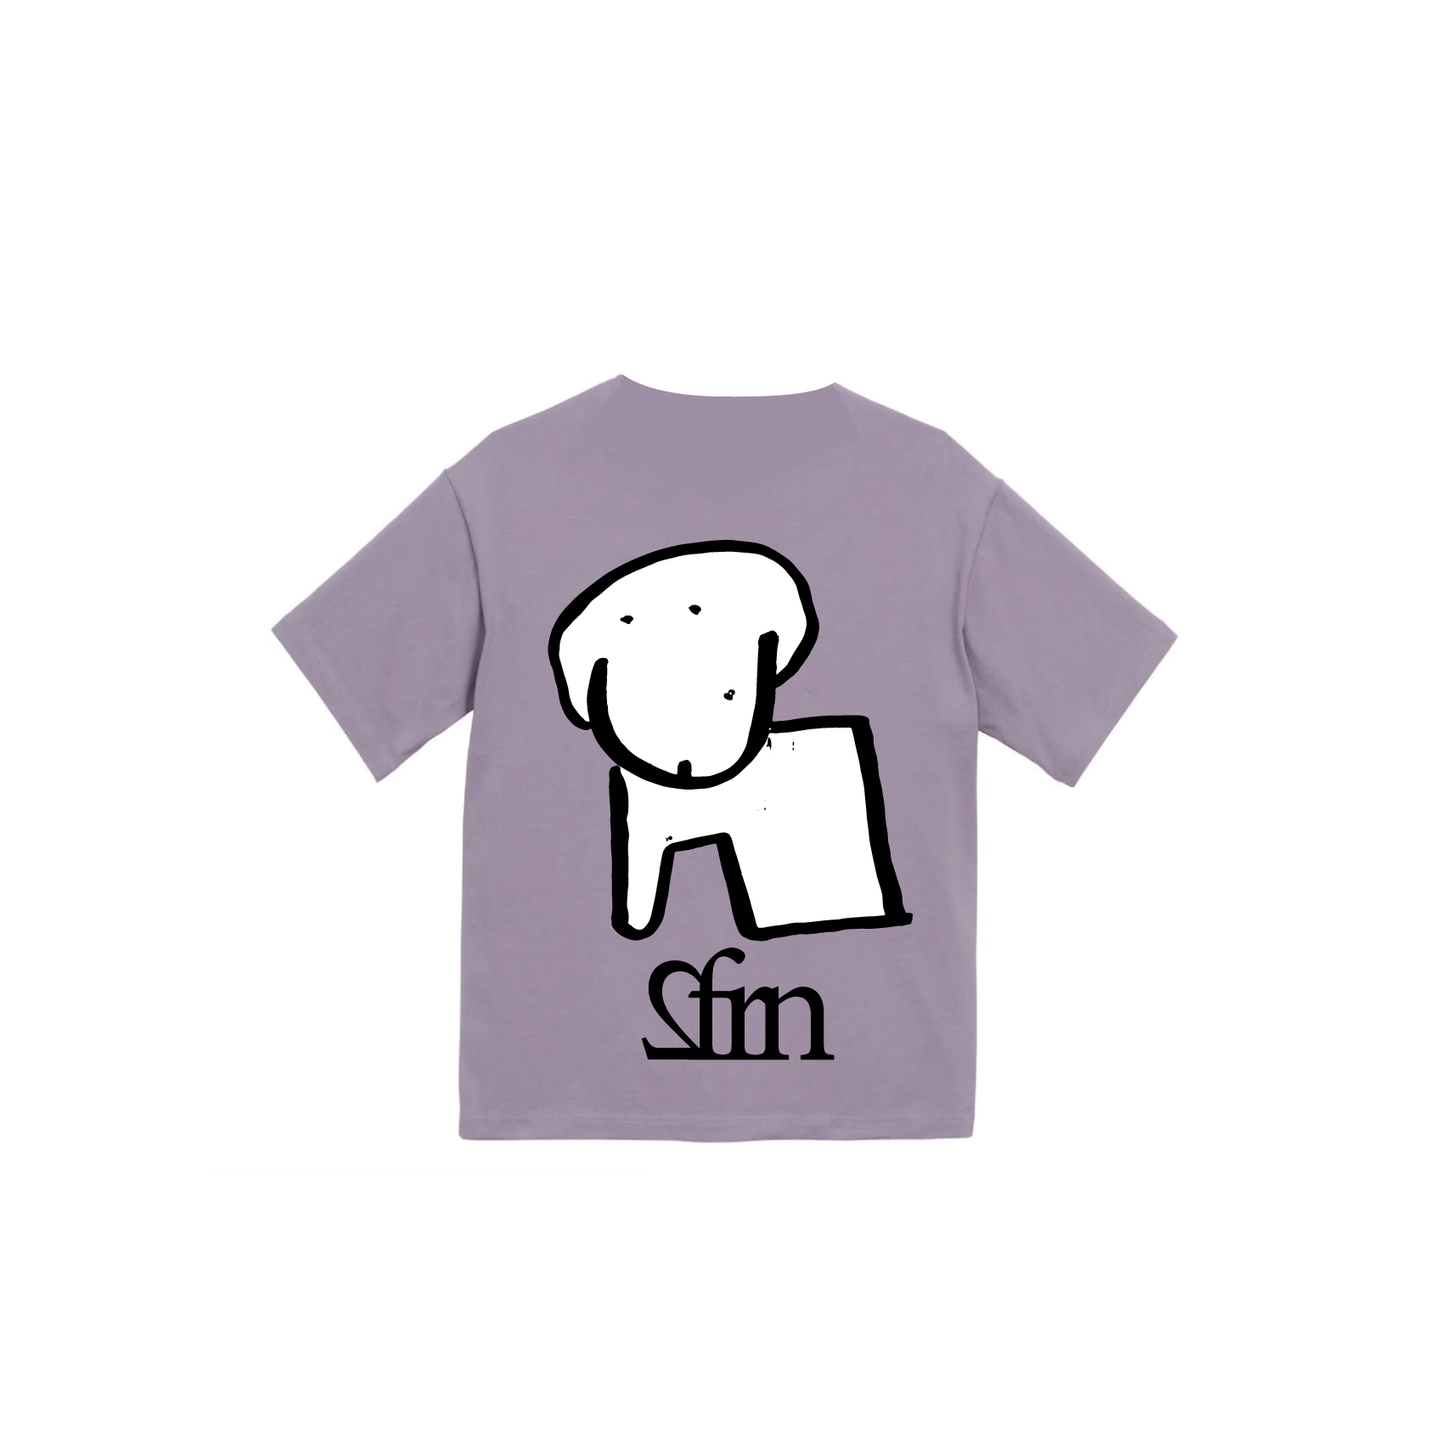 SFRN T-Shirt 犬 purple